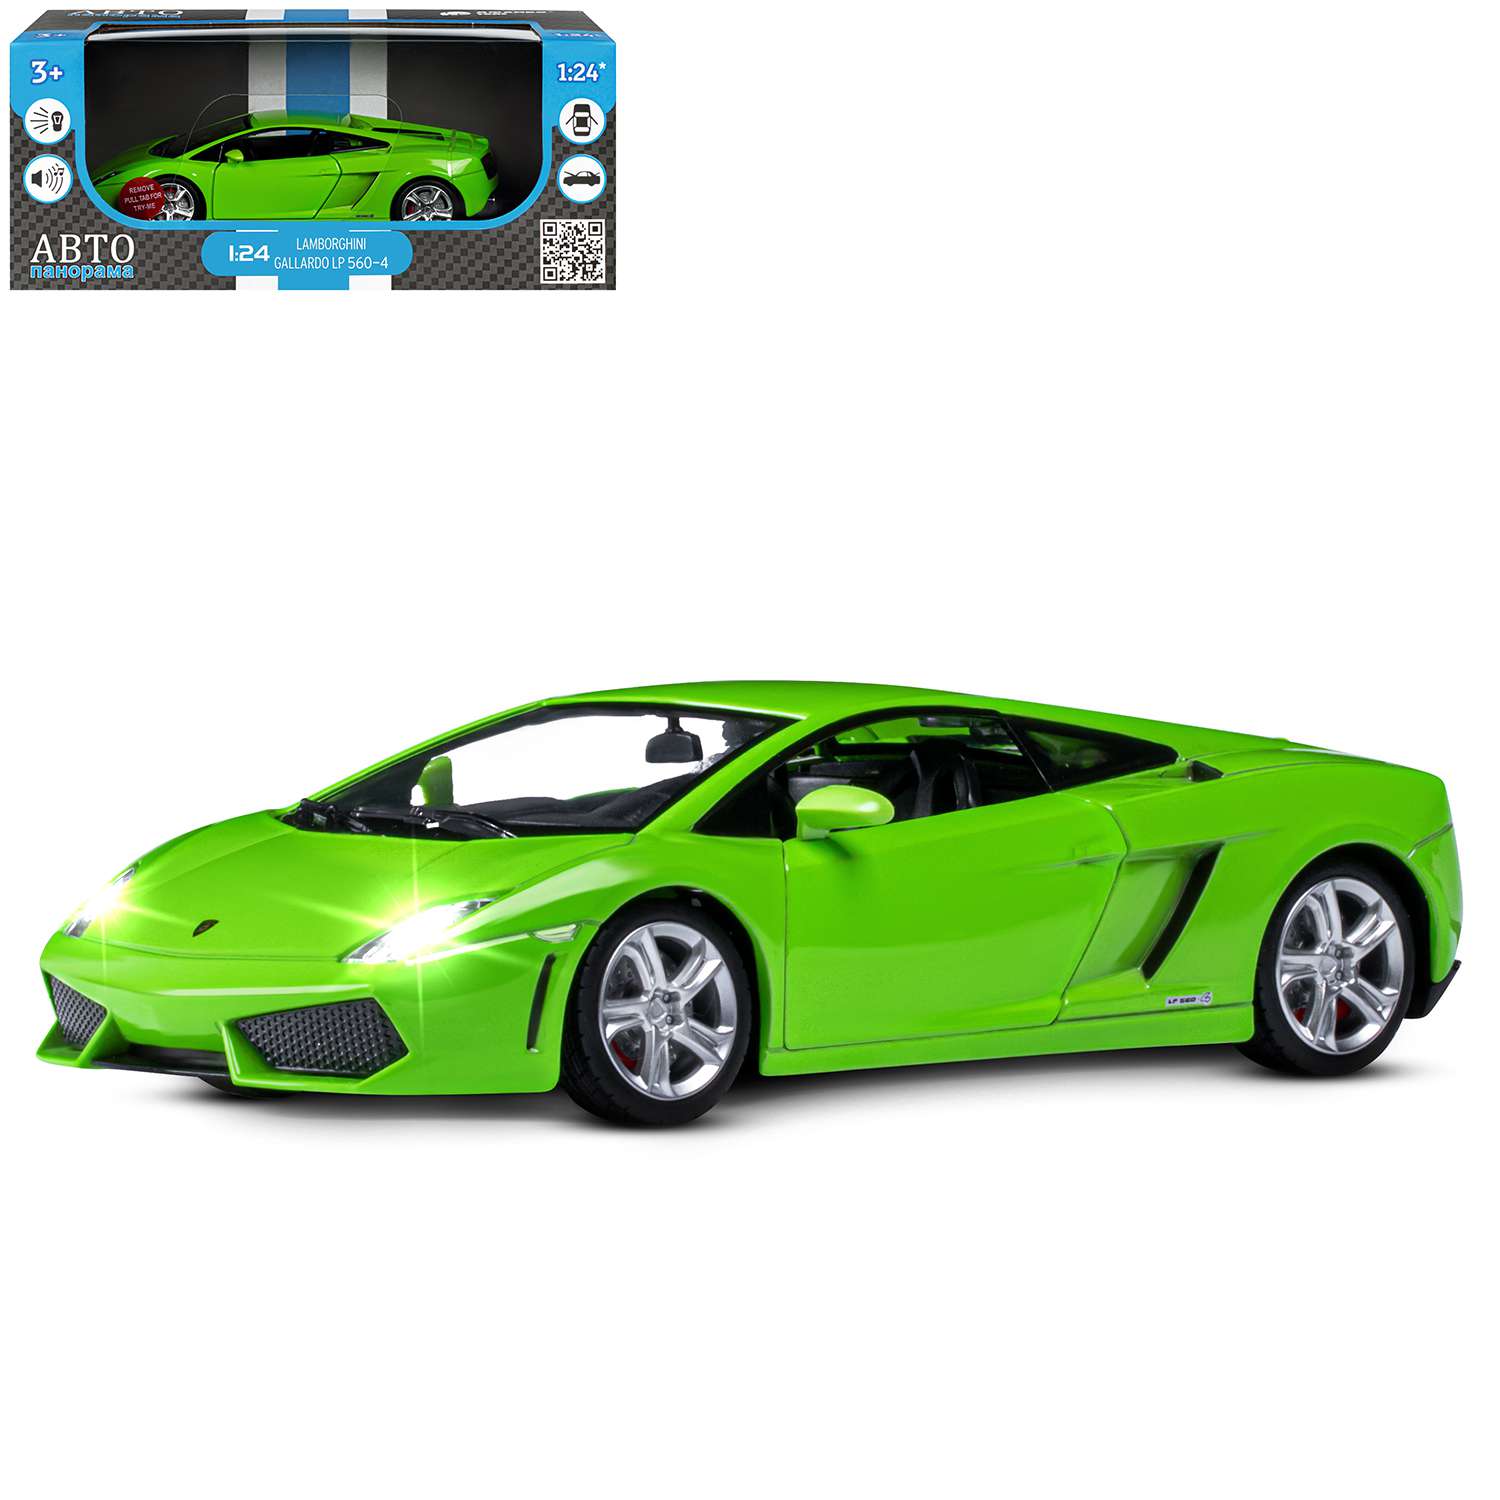 Машина JB1251382 Lamborghini Gallardo LP560-4 металл 1:24 зеленый свет, звук ТМ Автопанорама - Волгоград 